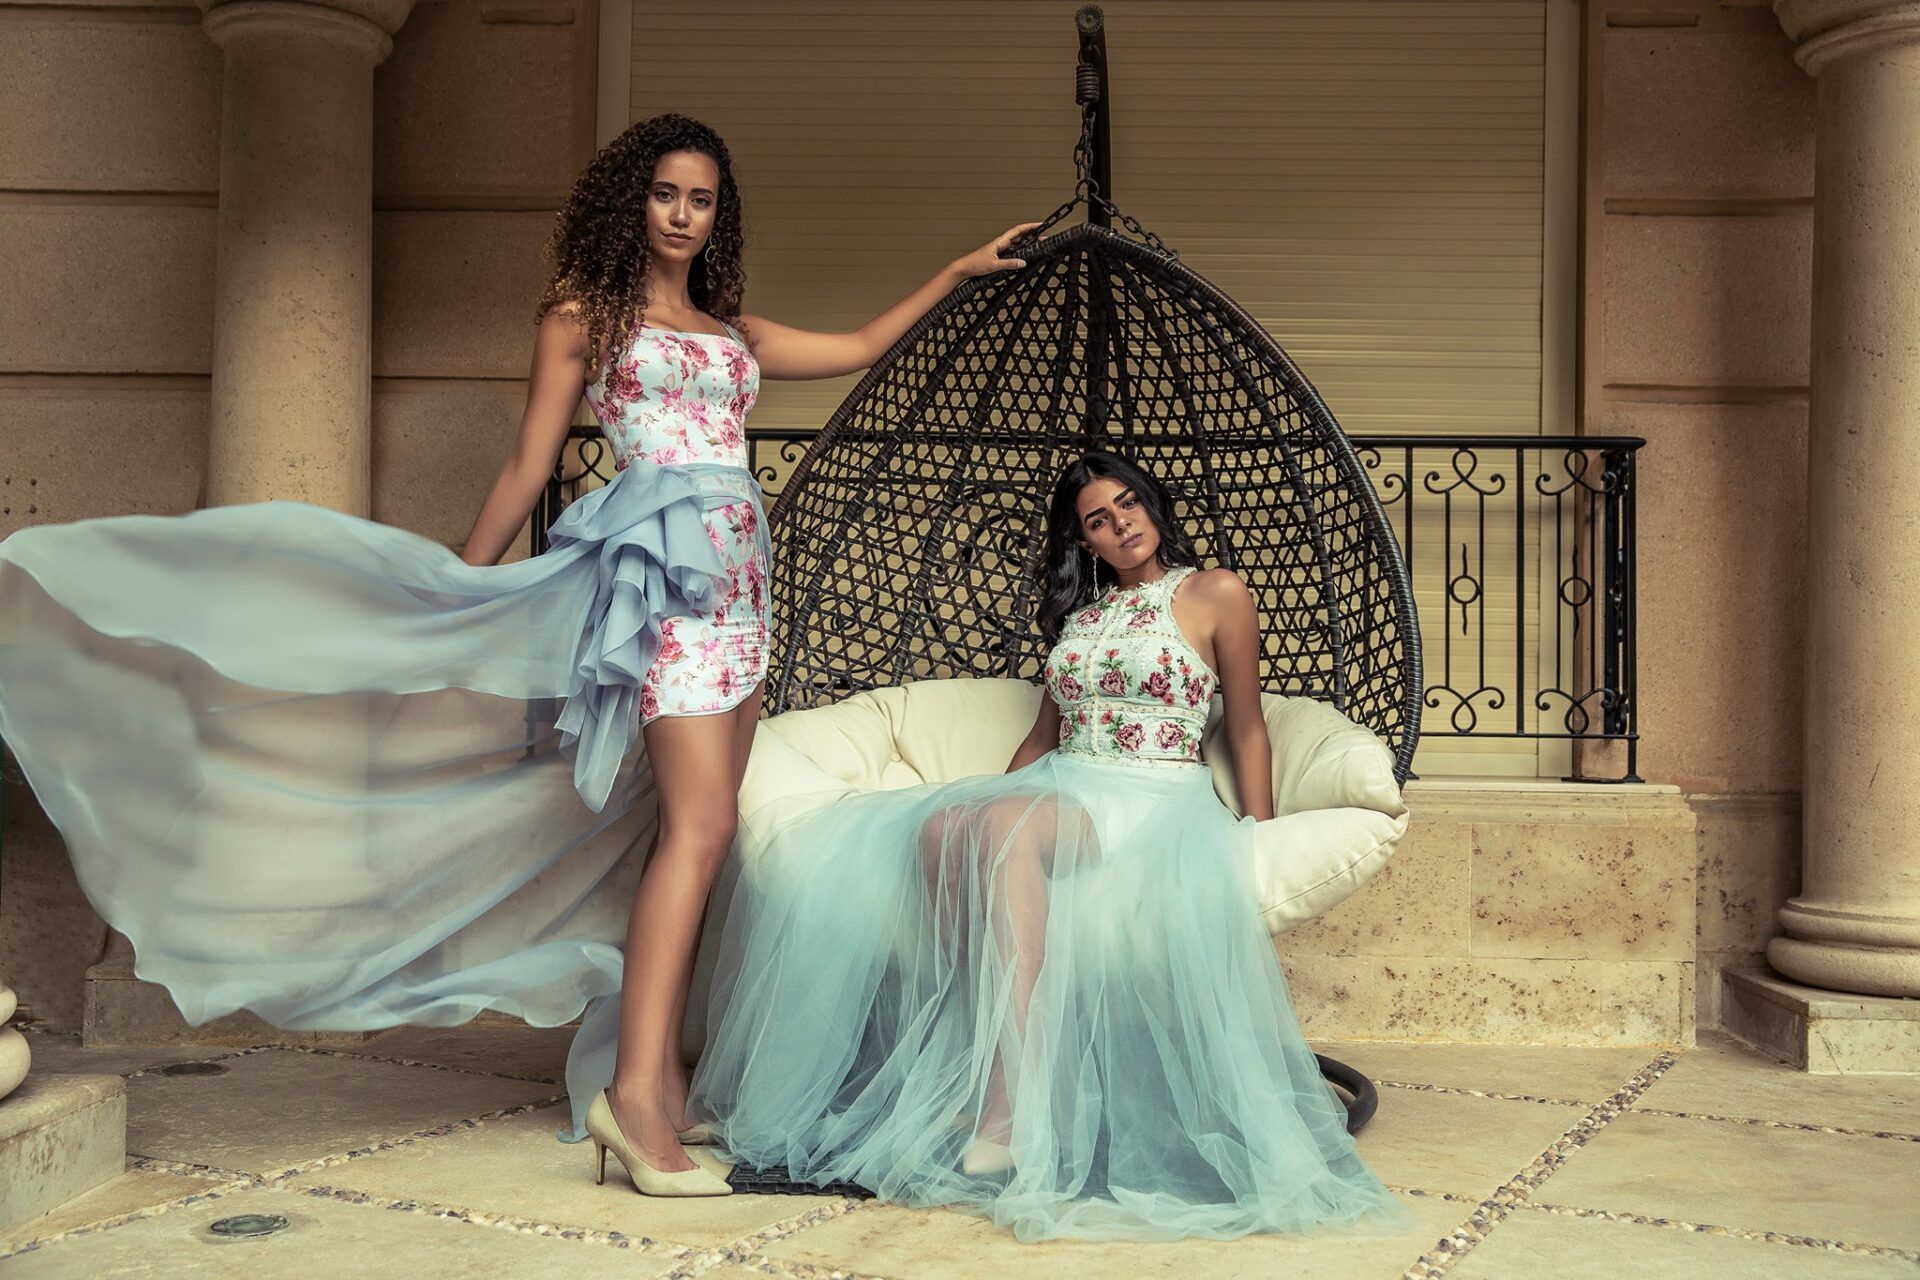 Egyptian fashion rental platform, La Reina secures seed funding.